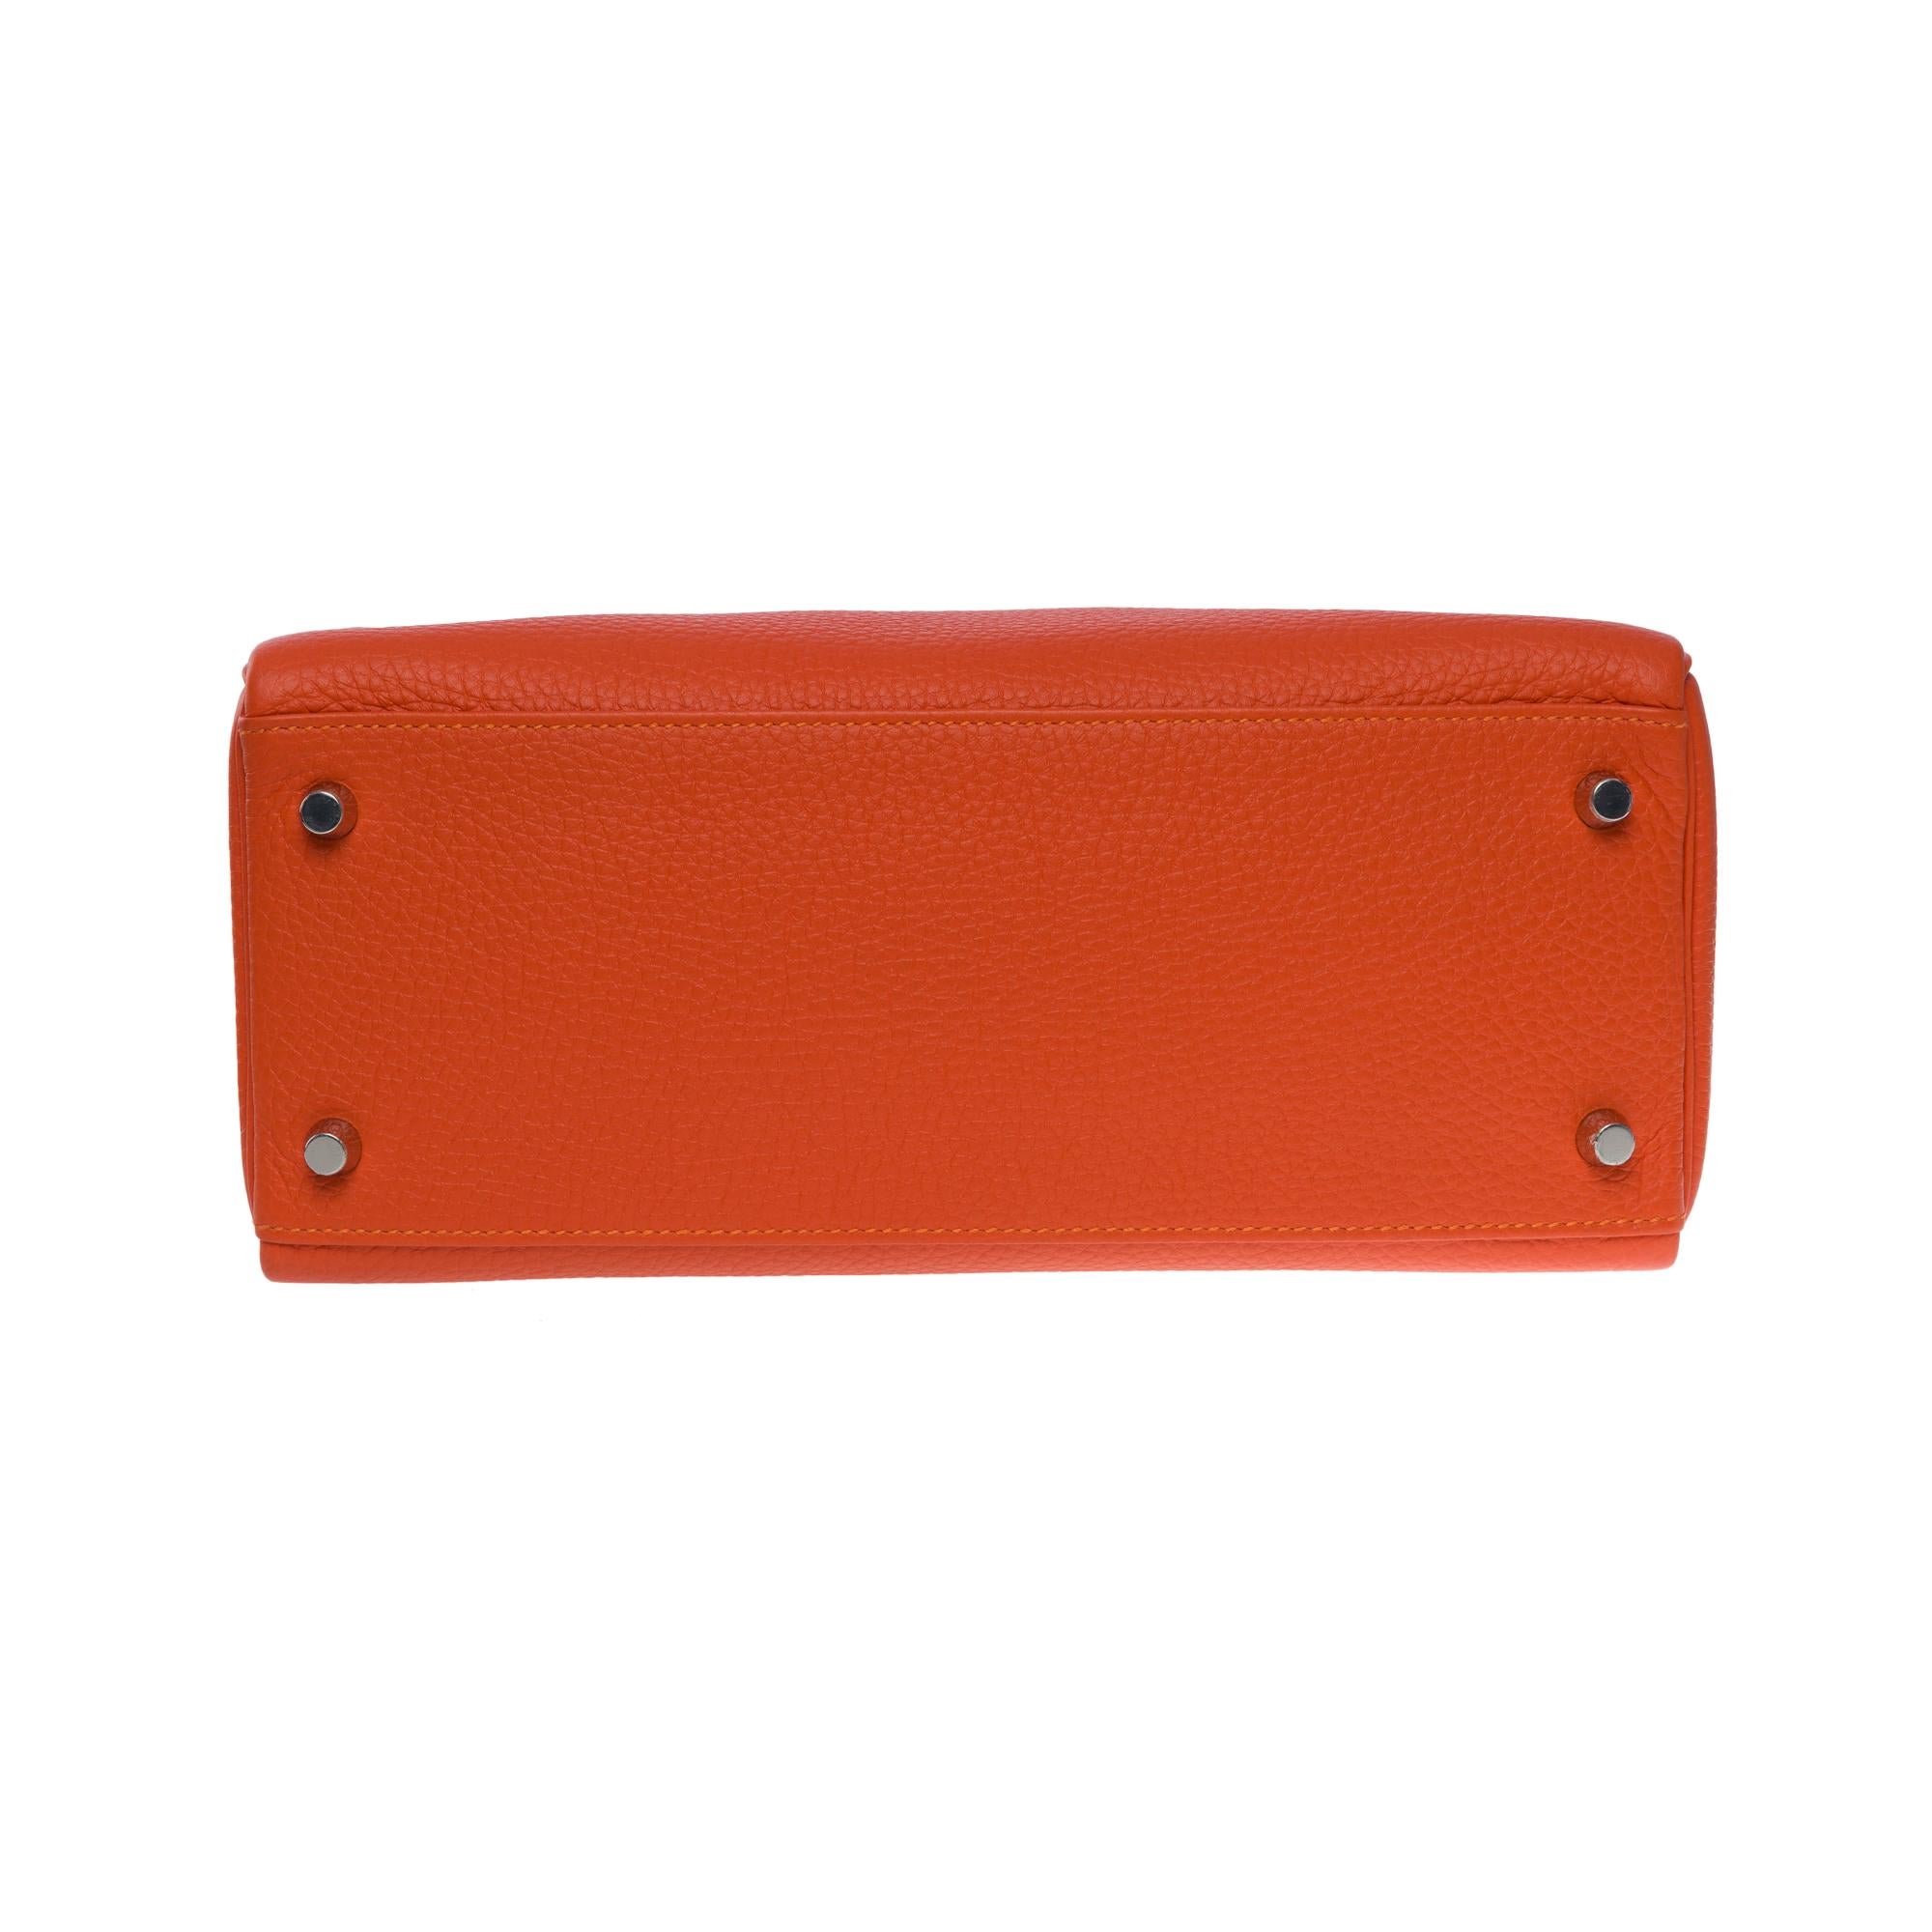 New Amazing Hermes Kelly 28 retourne handbag strap in Orange Feu leather, SHW For Sale 6